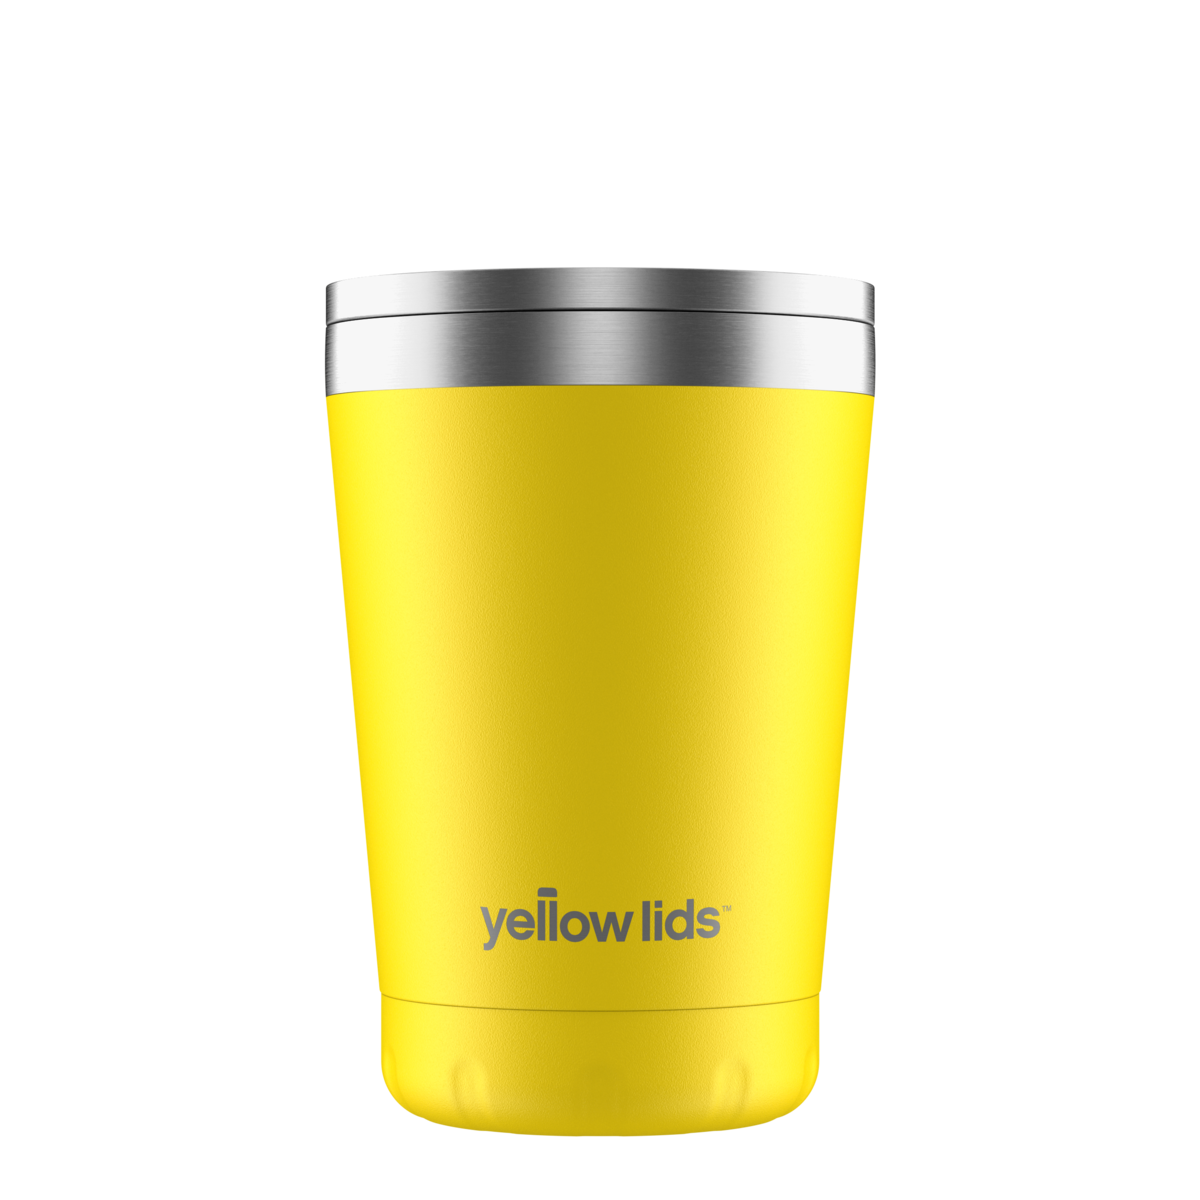 Tang Yellow Reusable Cup 310ml